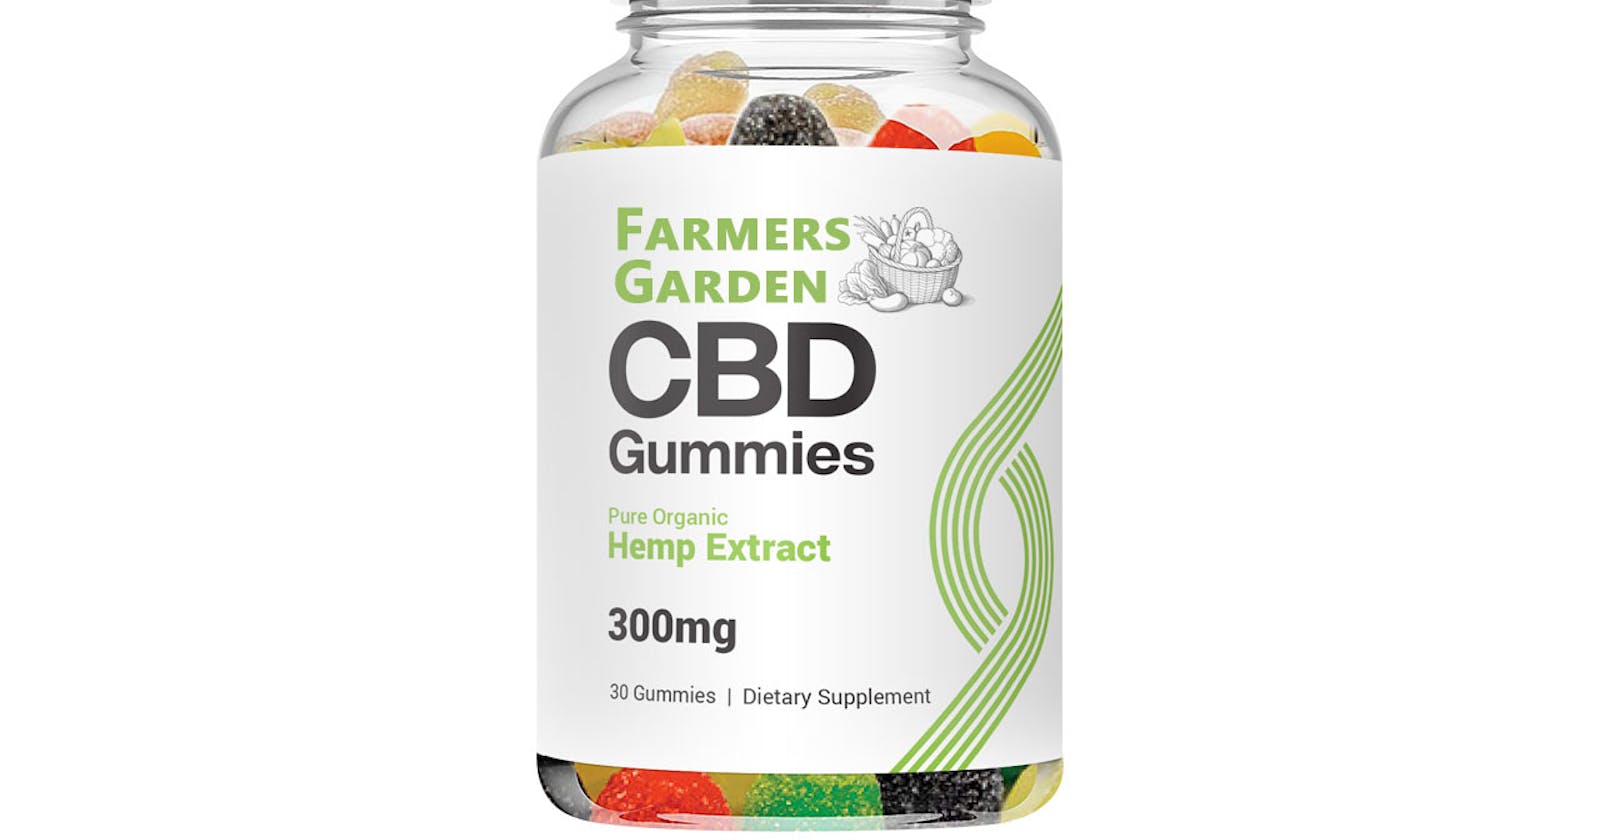 Farmers Garden CBD Gummies [Impact Garden CBD Gummies] Does It Work? Ingredients, Benefits & Where to Buy?